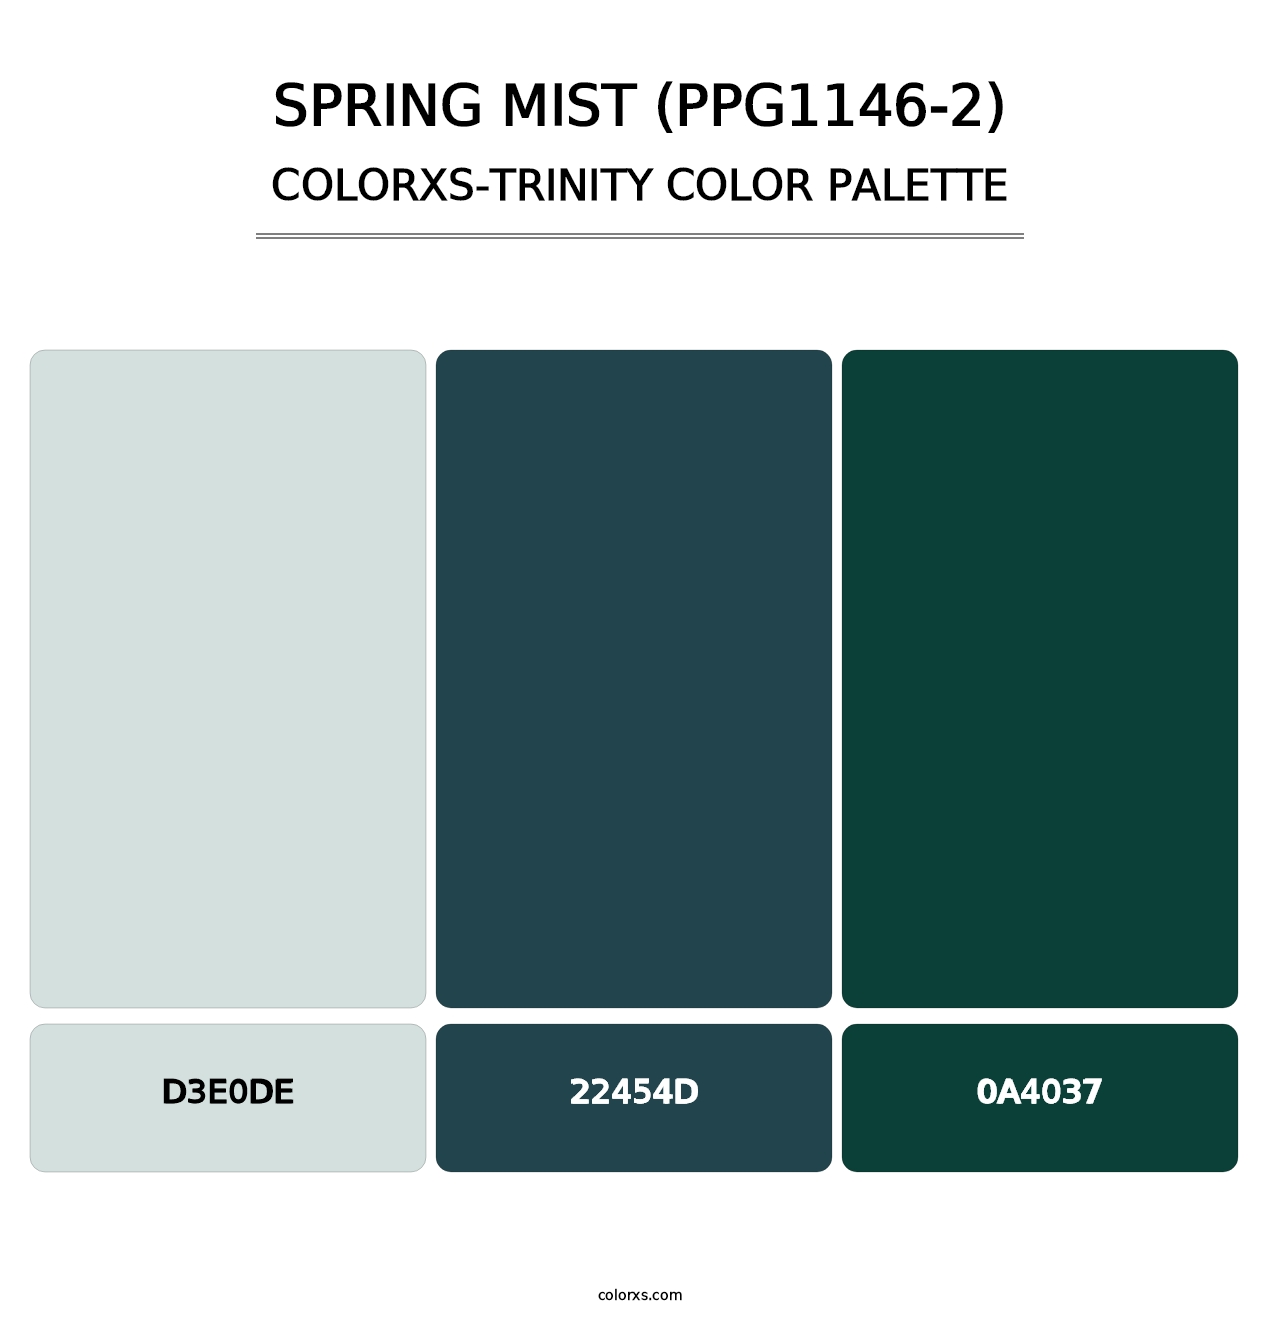 Spring Mist (PPG1146-2) - Colorxs Trinity Palette